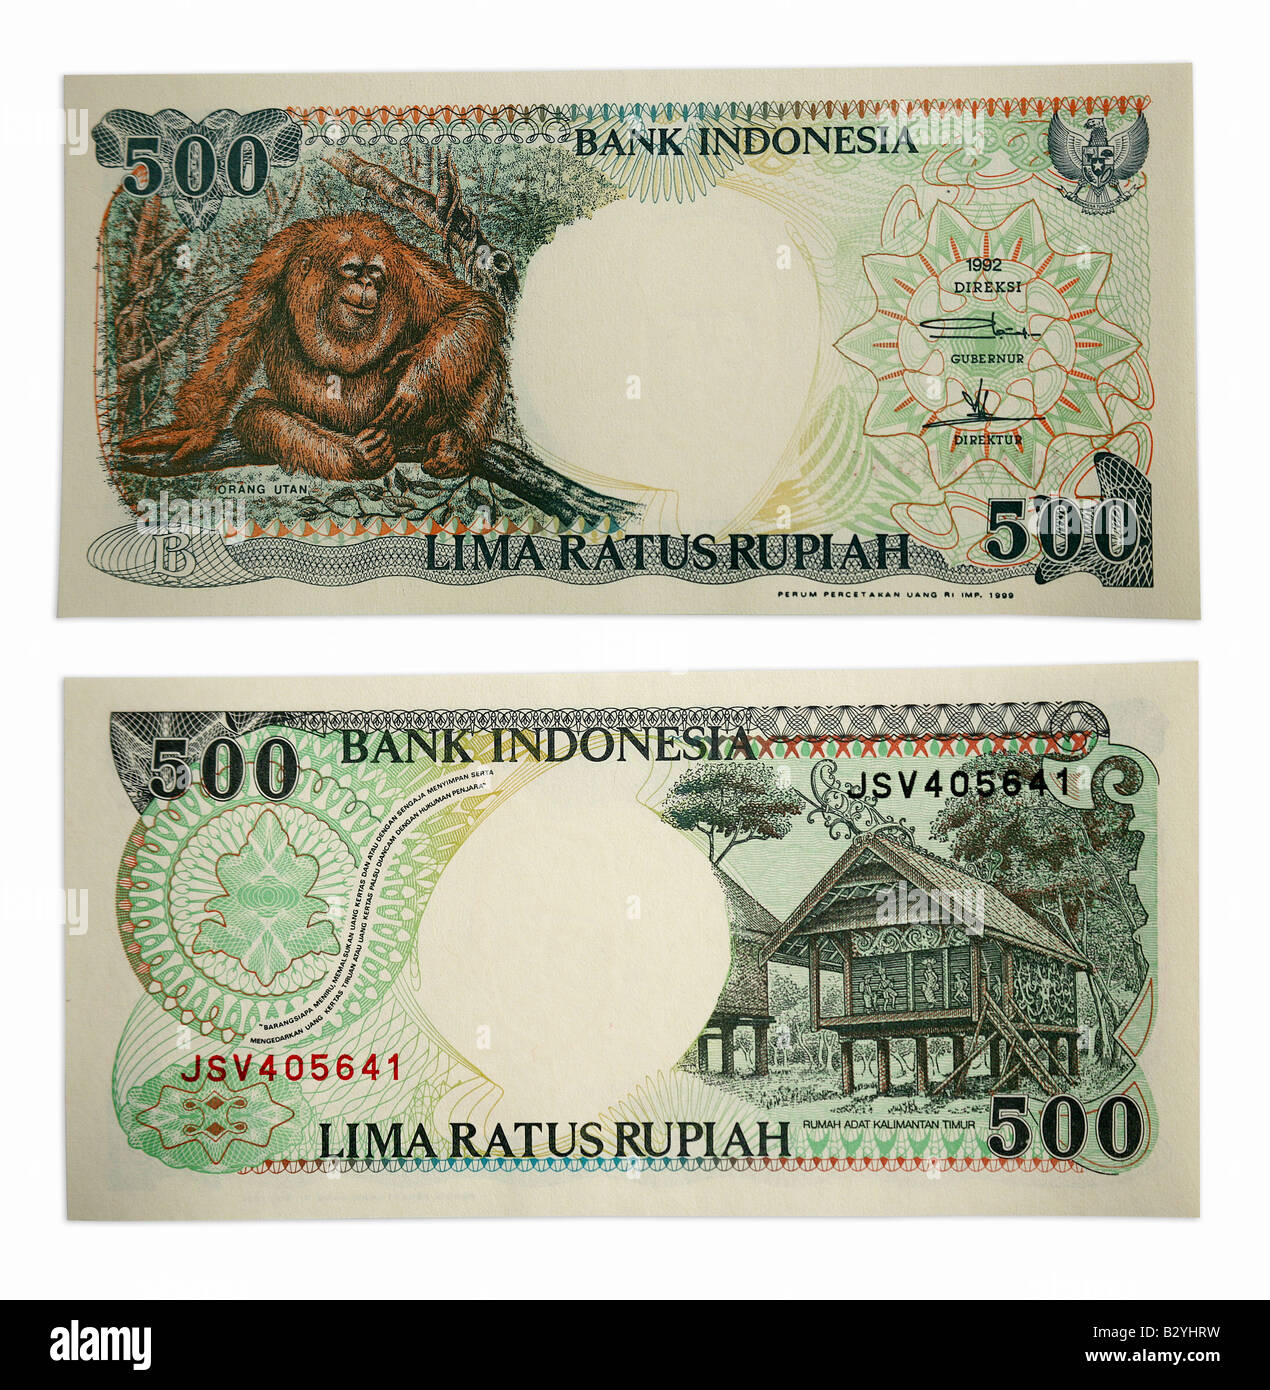 500 Lima Ratus Rupiah Bank Indonesia Stock Photo